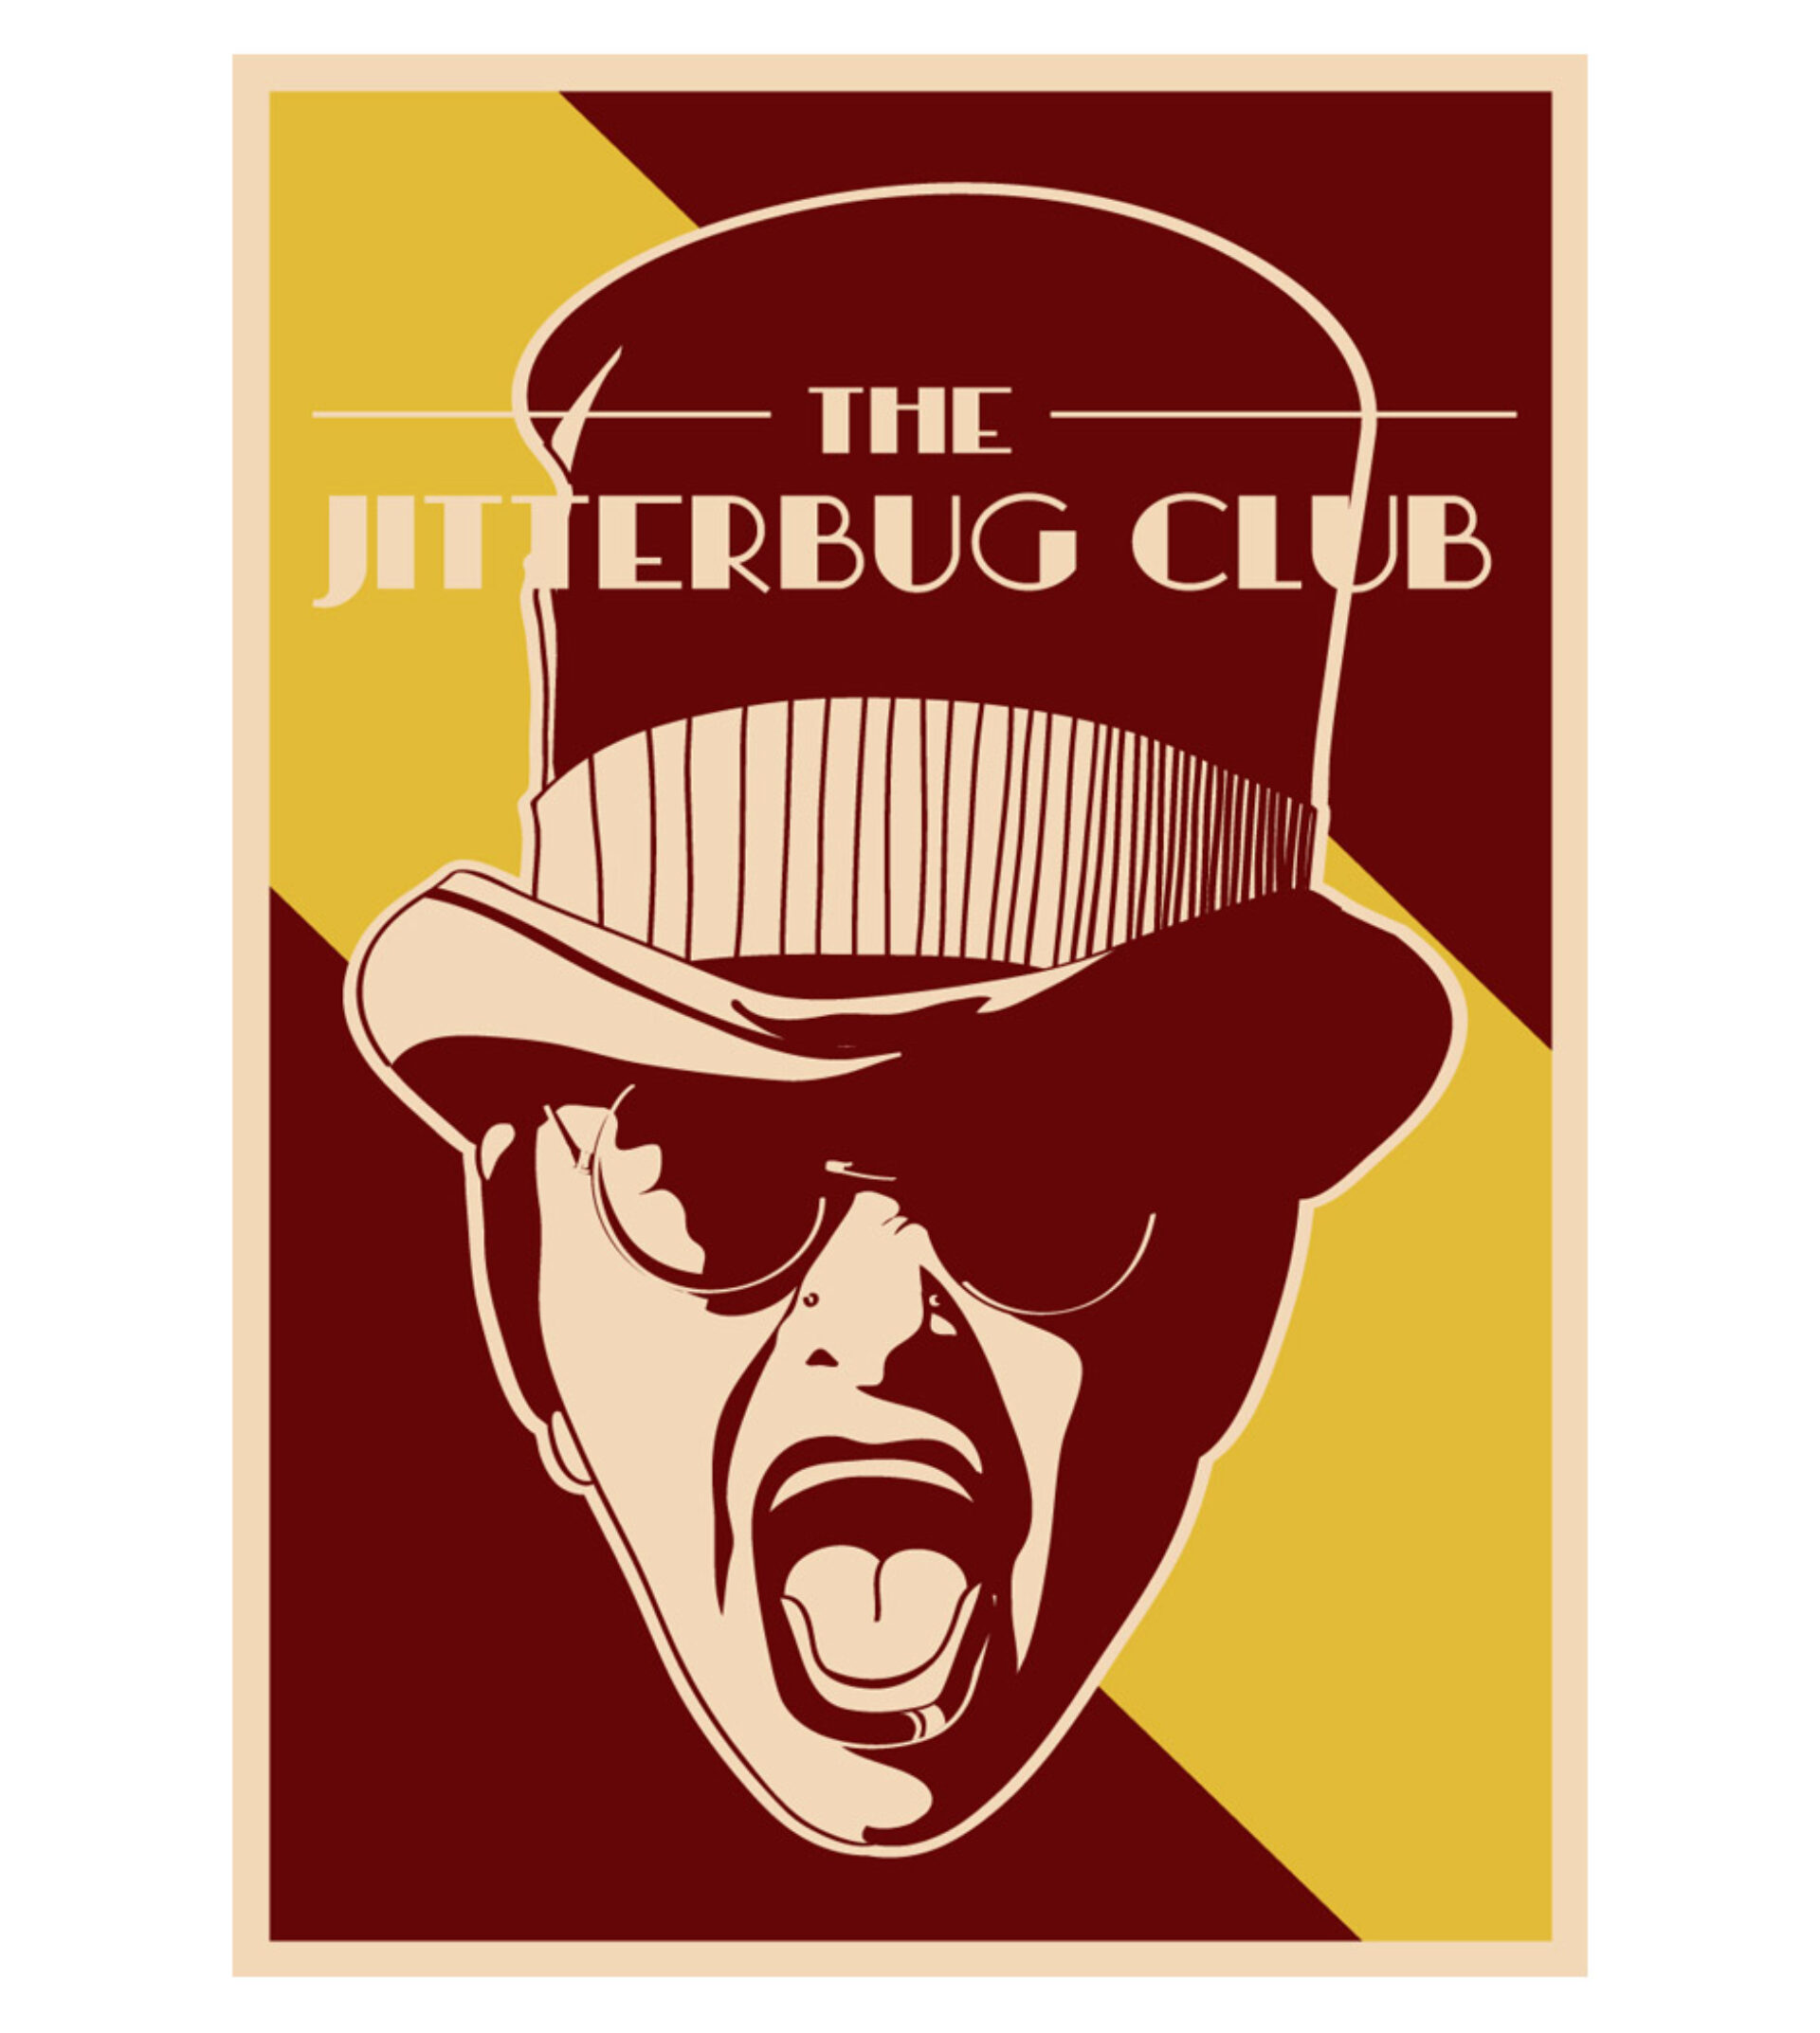 The jitterbug club 05